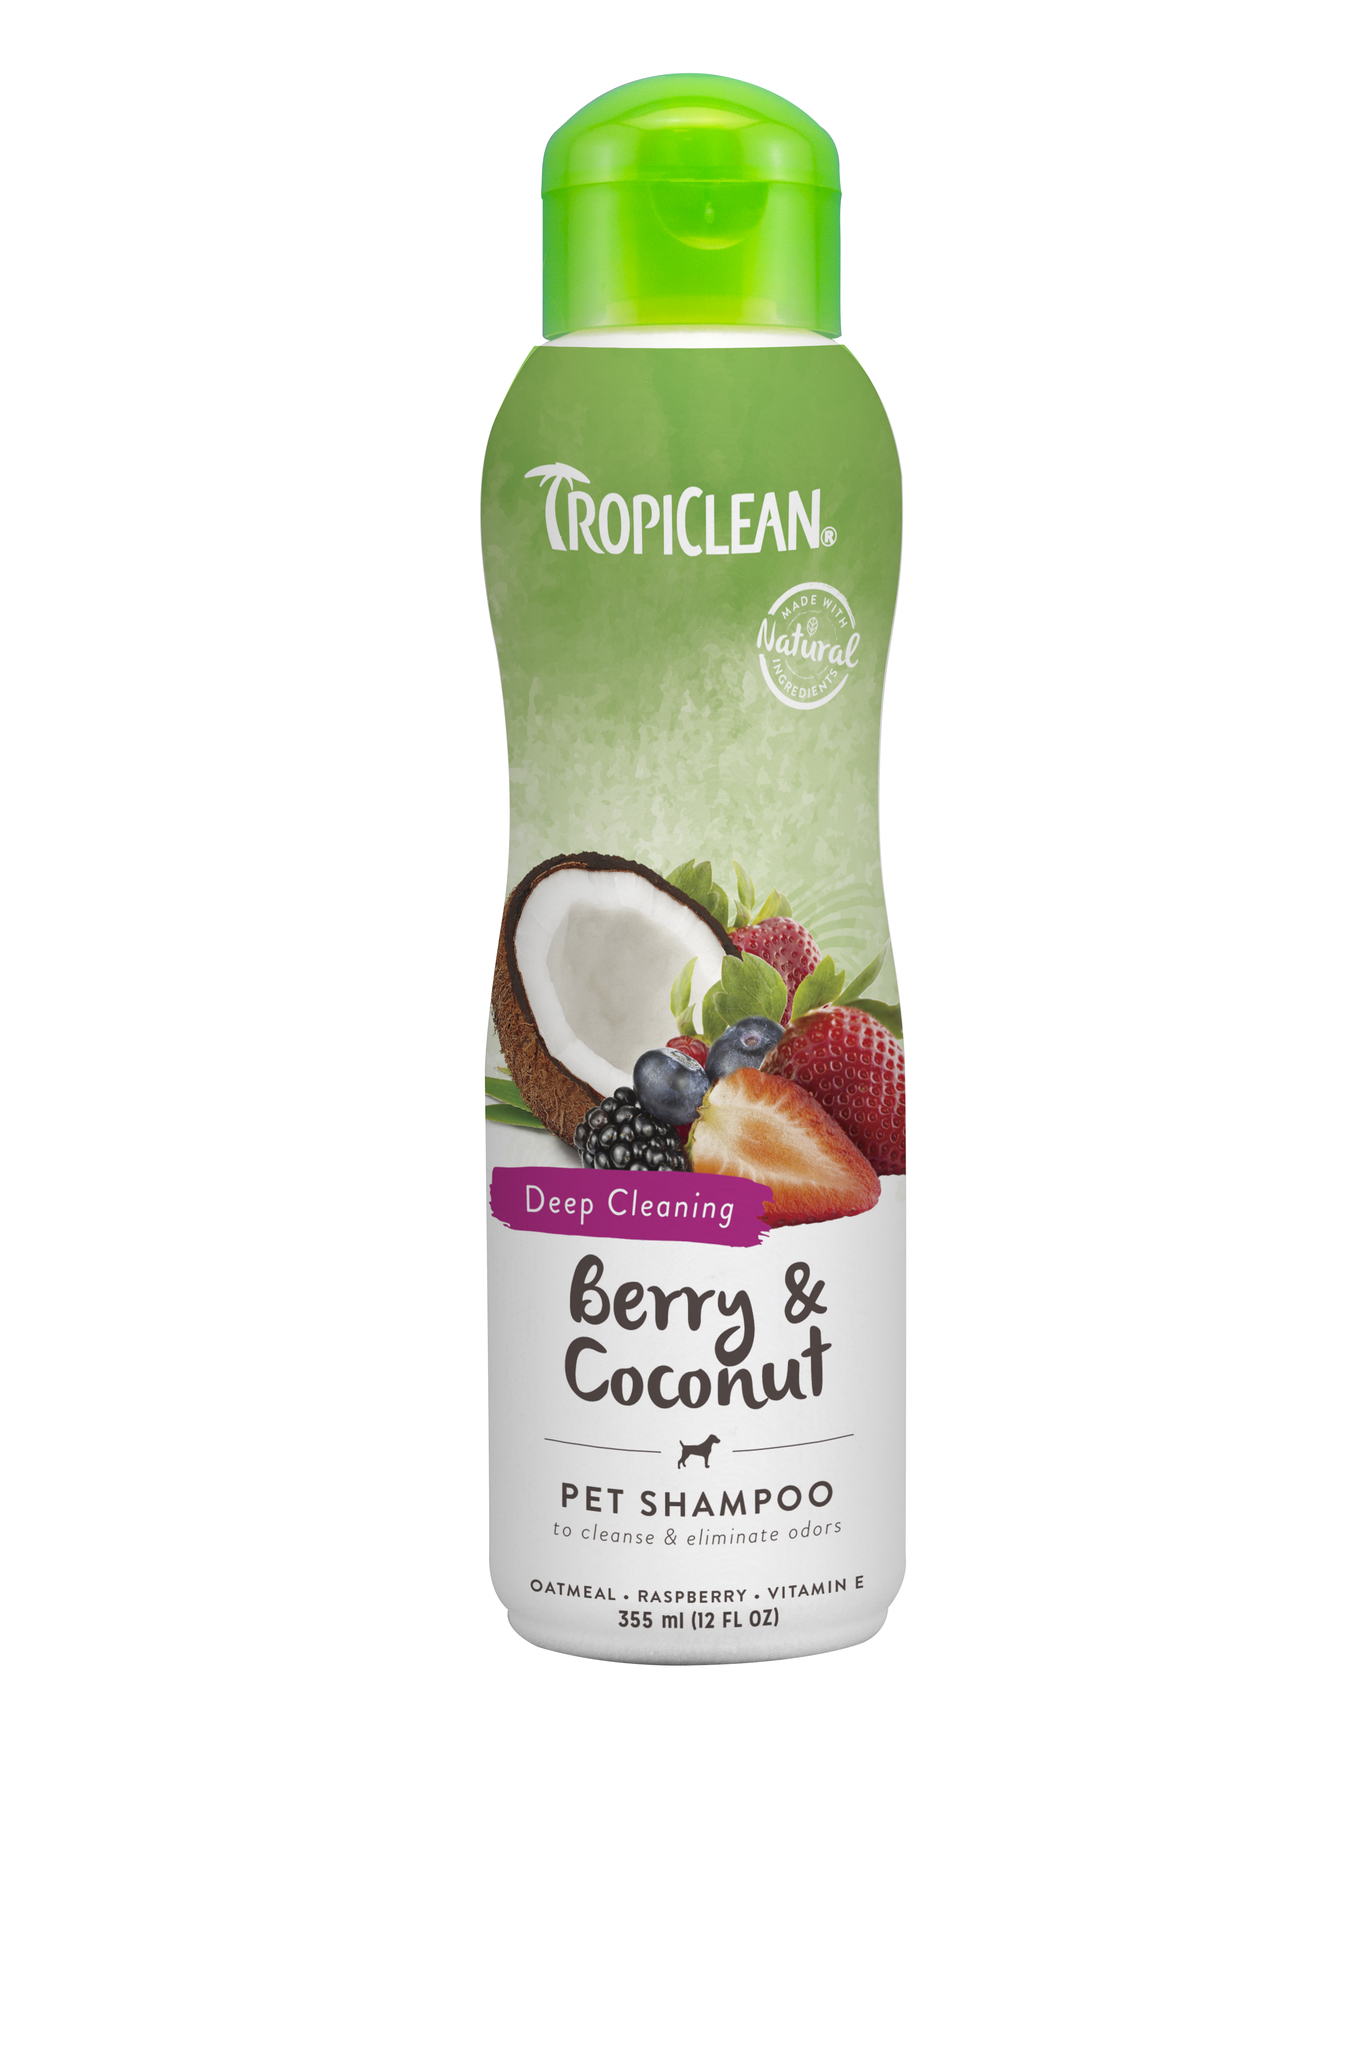 Tropiclean Anti-odor & Deep Cleaning shampoo berry & coconut